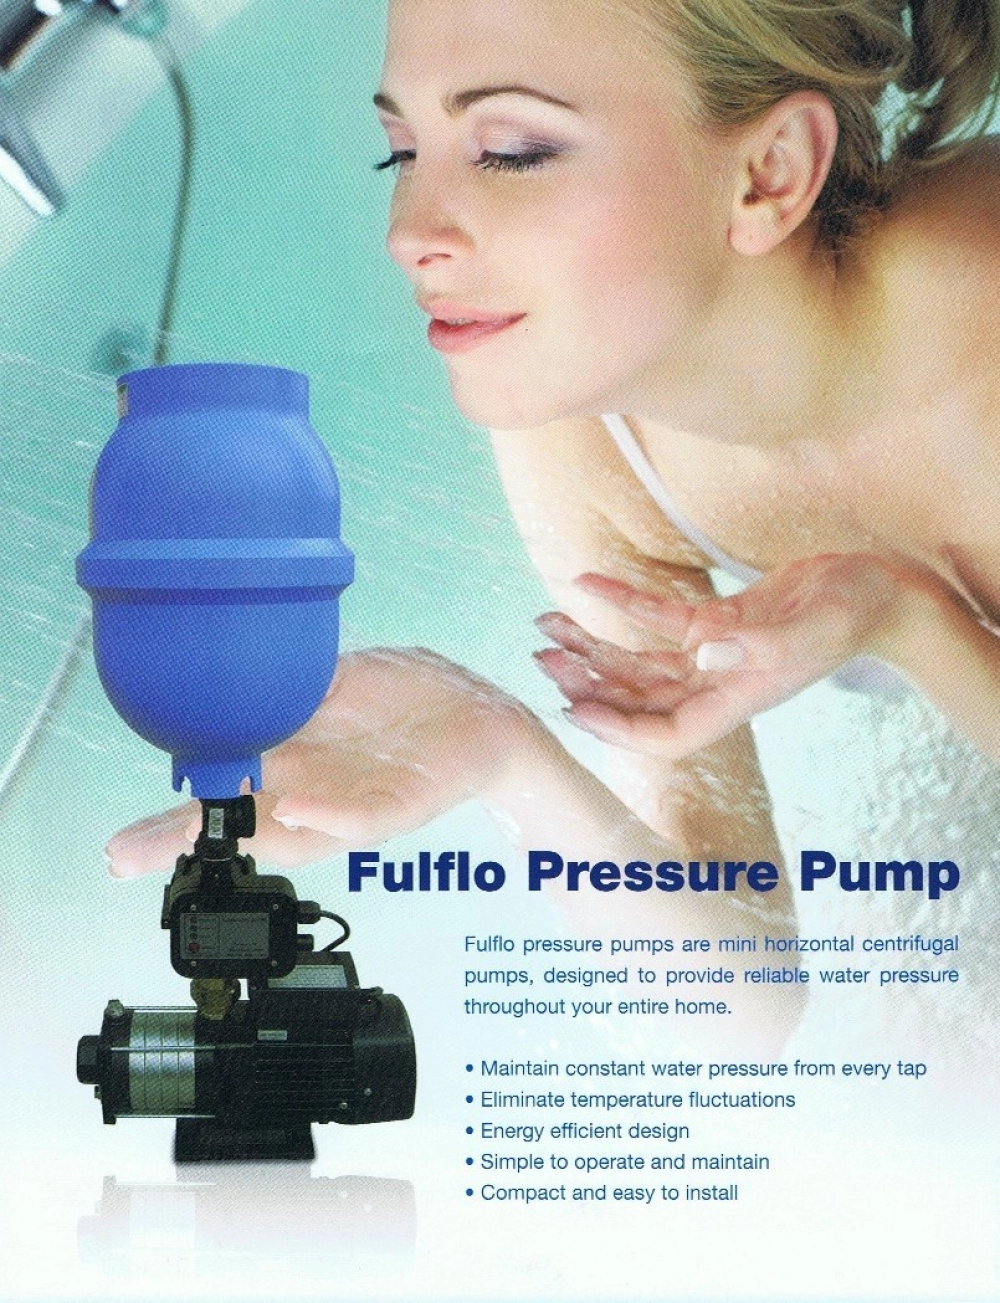 Fulflo Pressure Pump